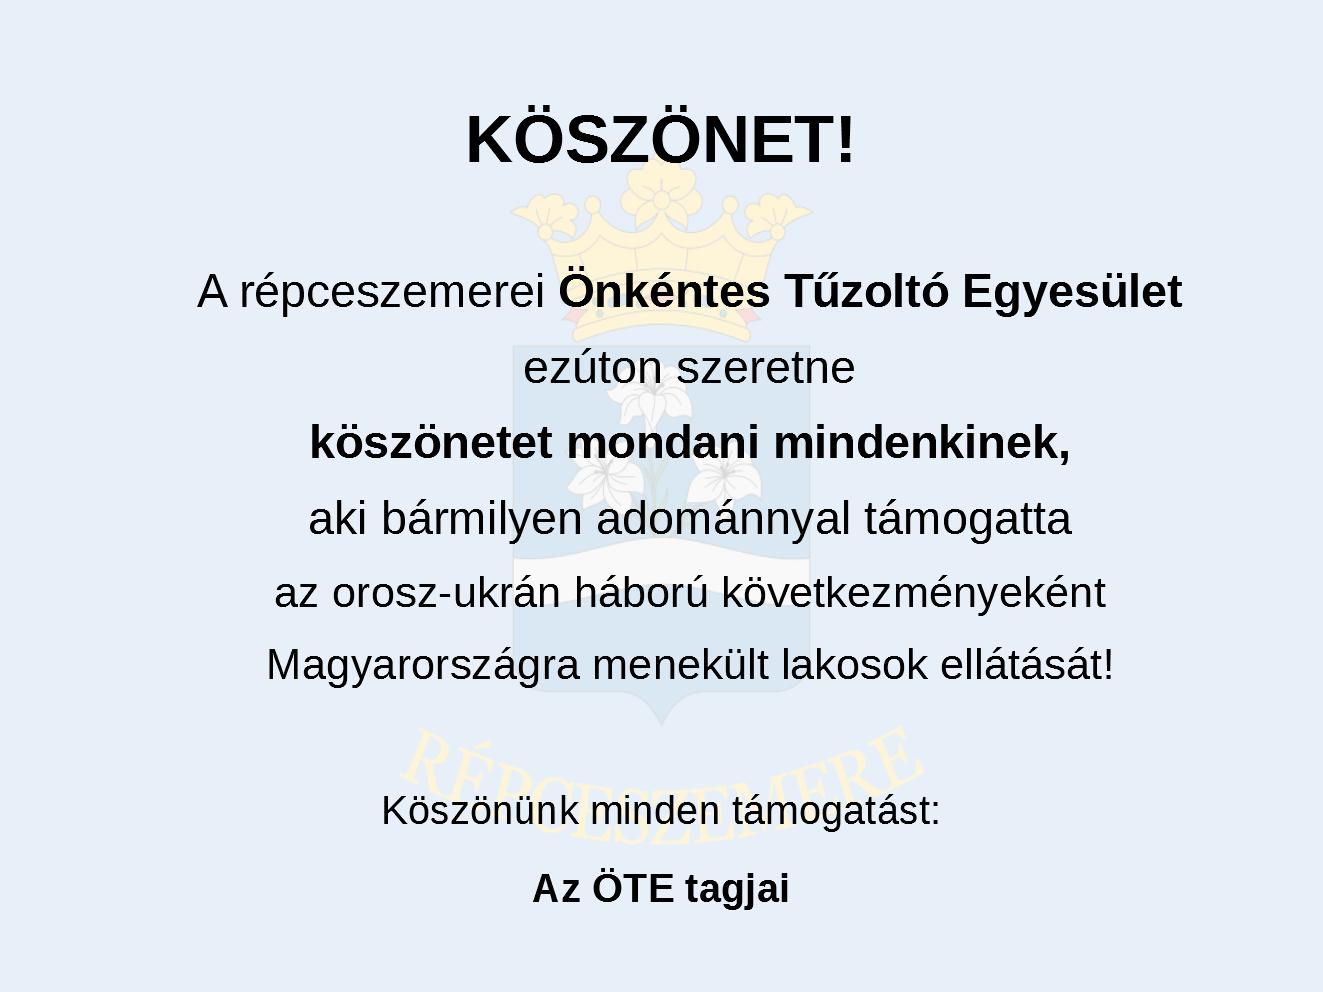 ote_koszonet